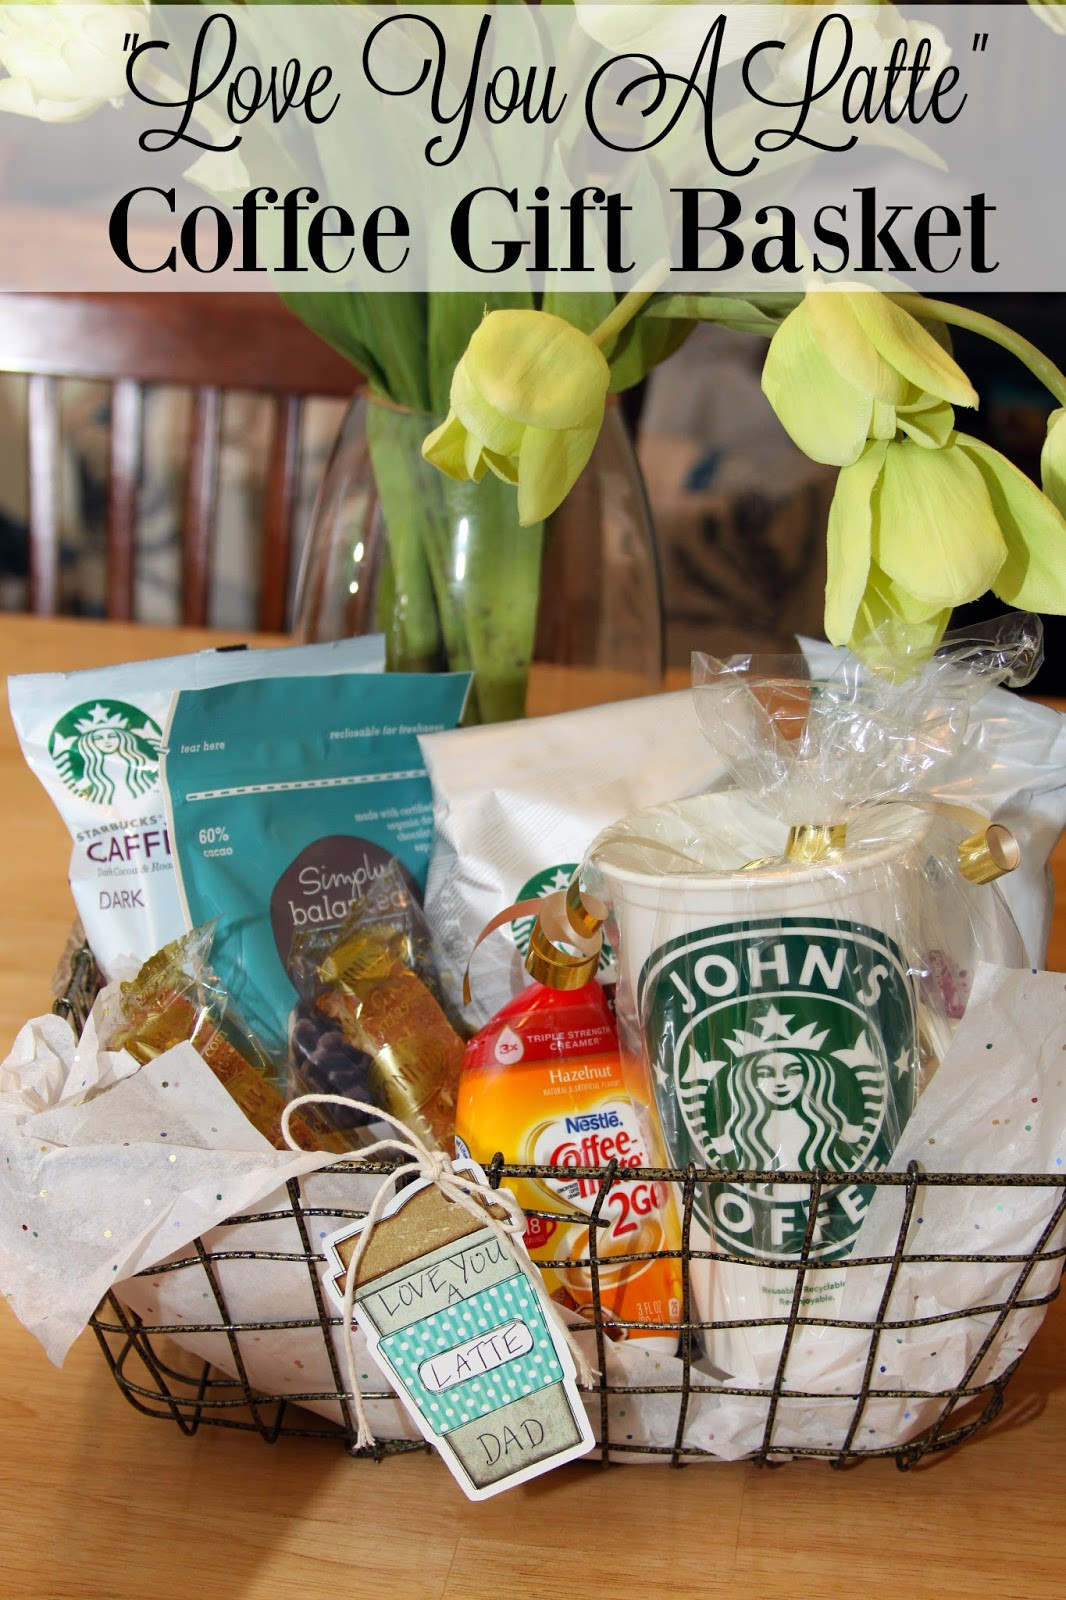 Coffee Gift Basket Ideas
 For the Love of Food Ninja Coffee Bar and Love You a